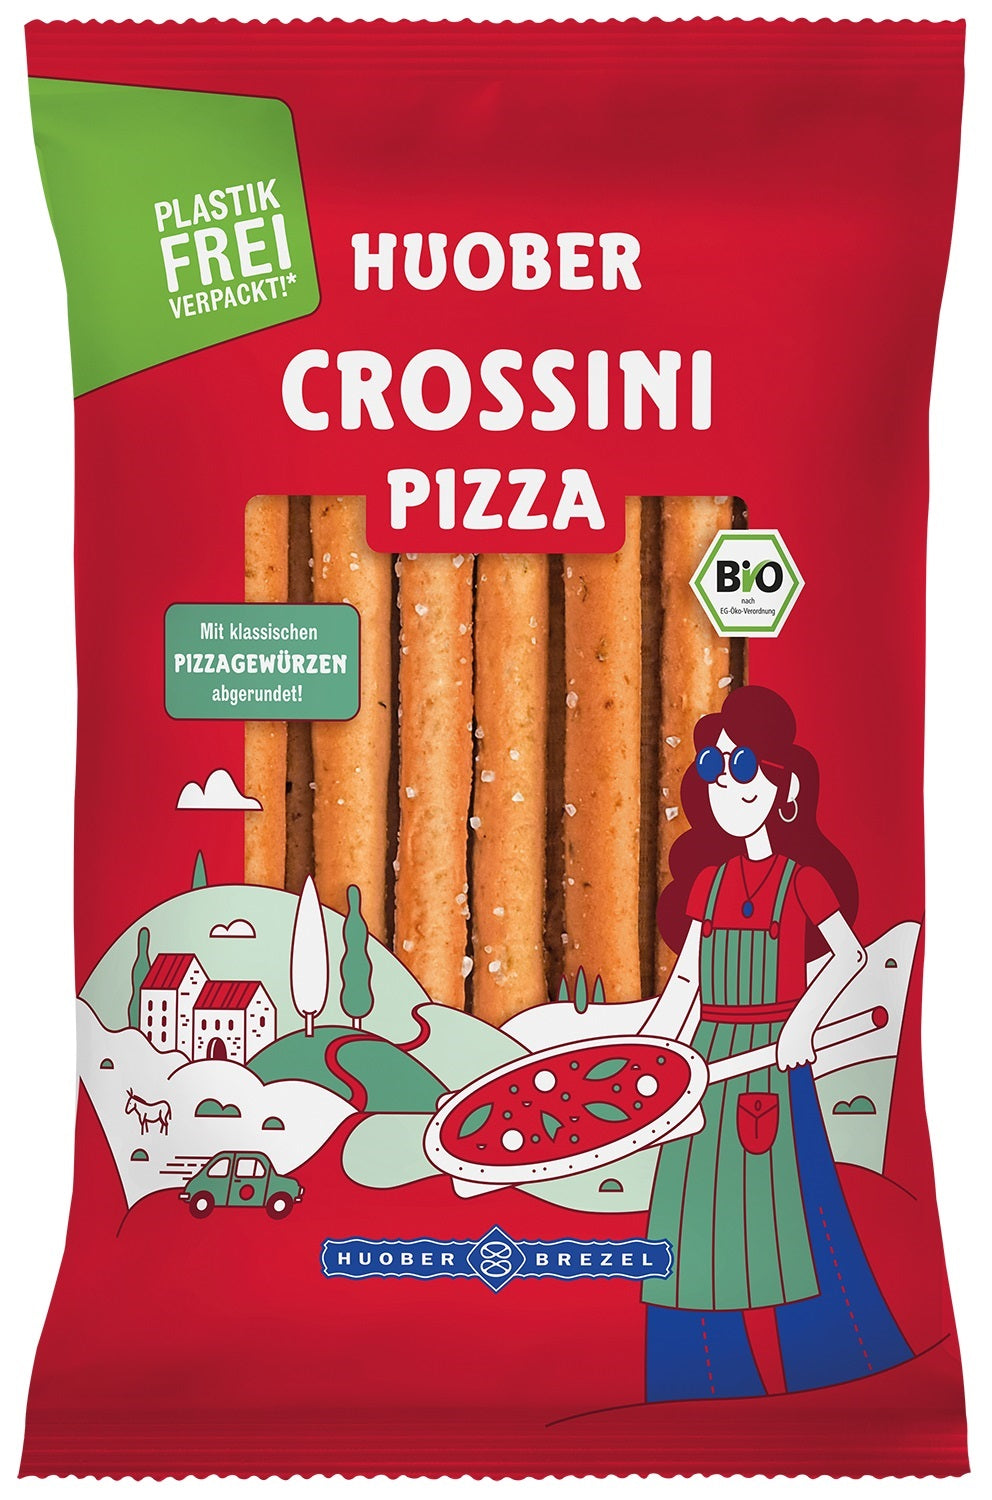 HUOBER Bio Crossini Pizza, plastikfrei verpackt, 12 Packungen à 100g